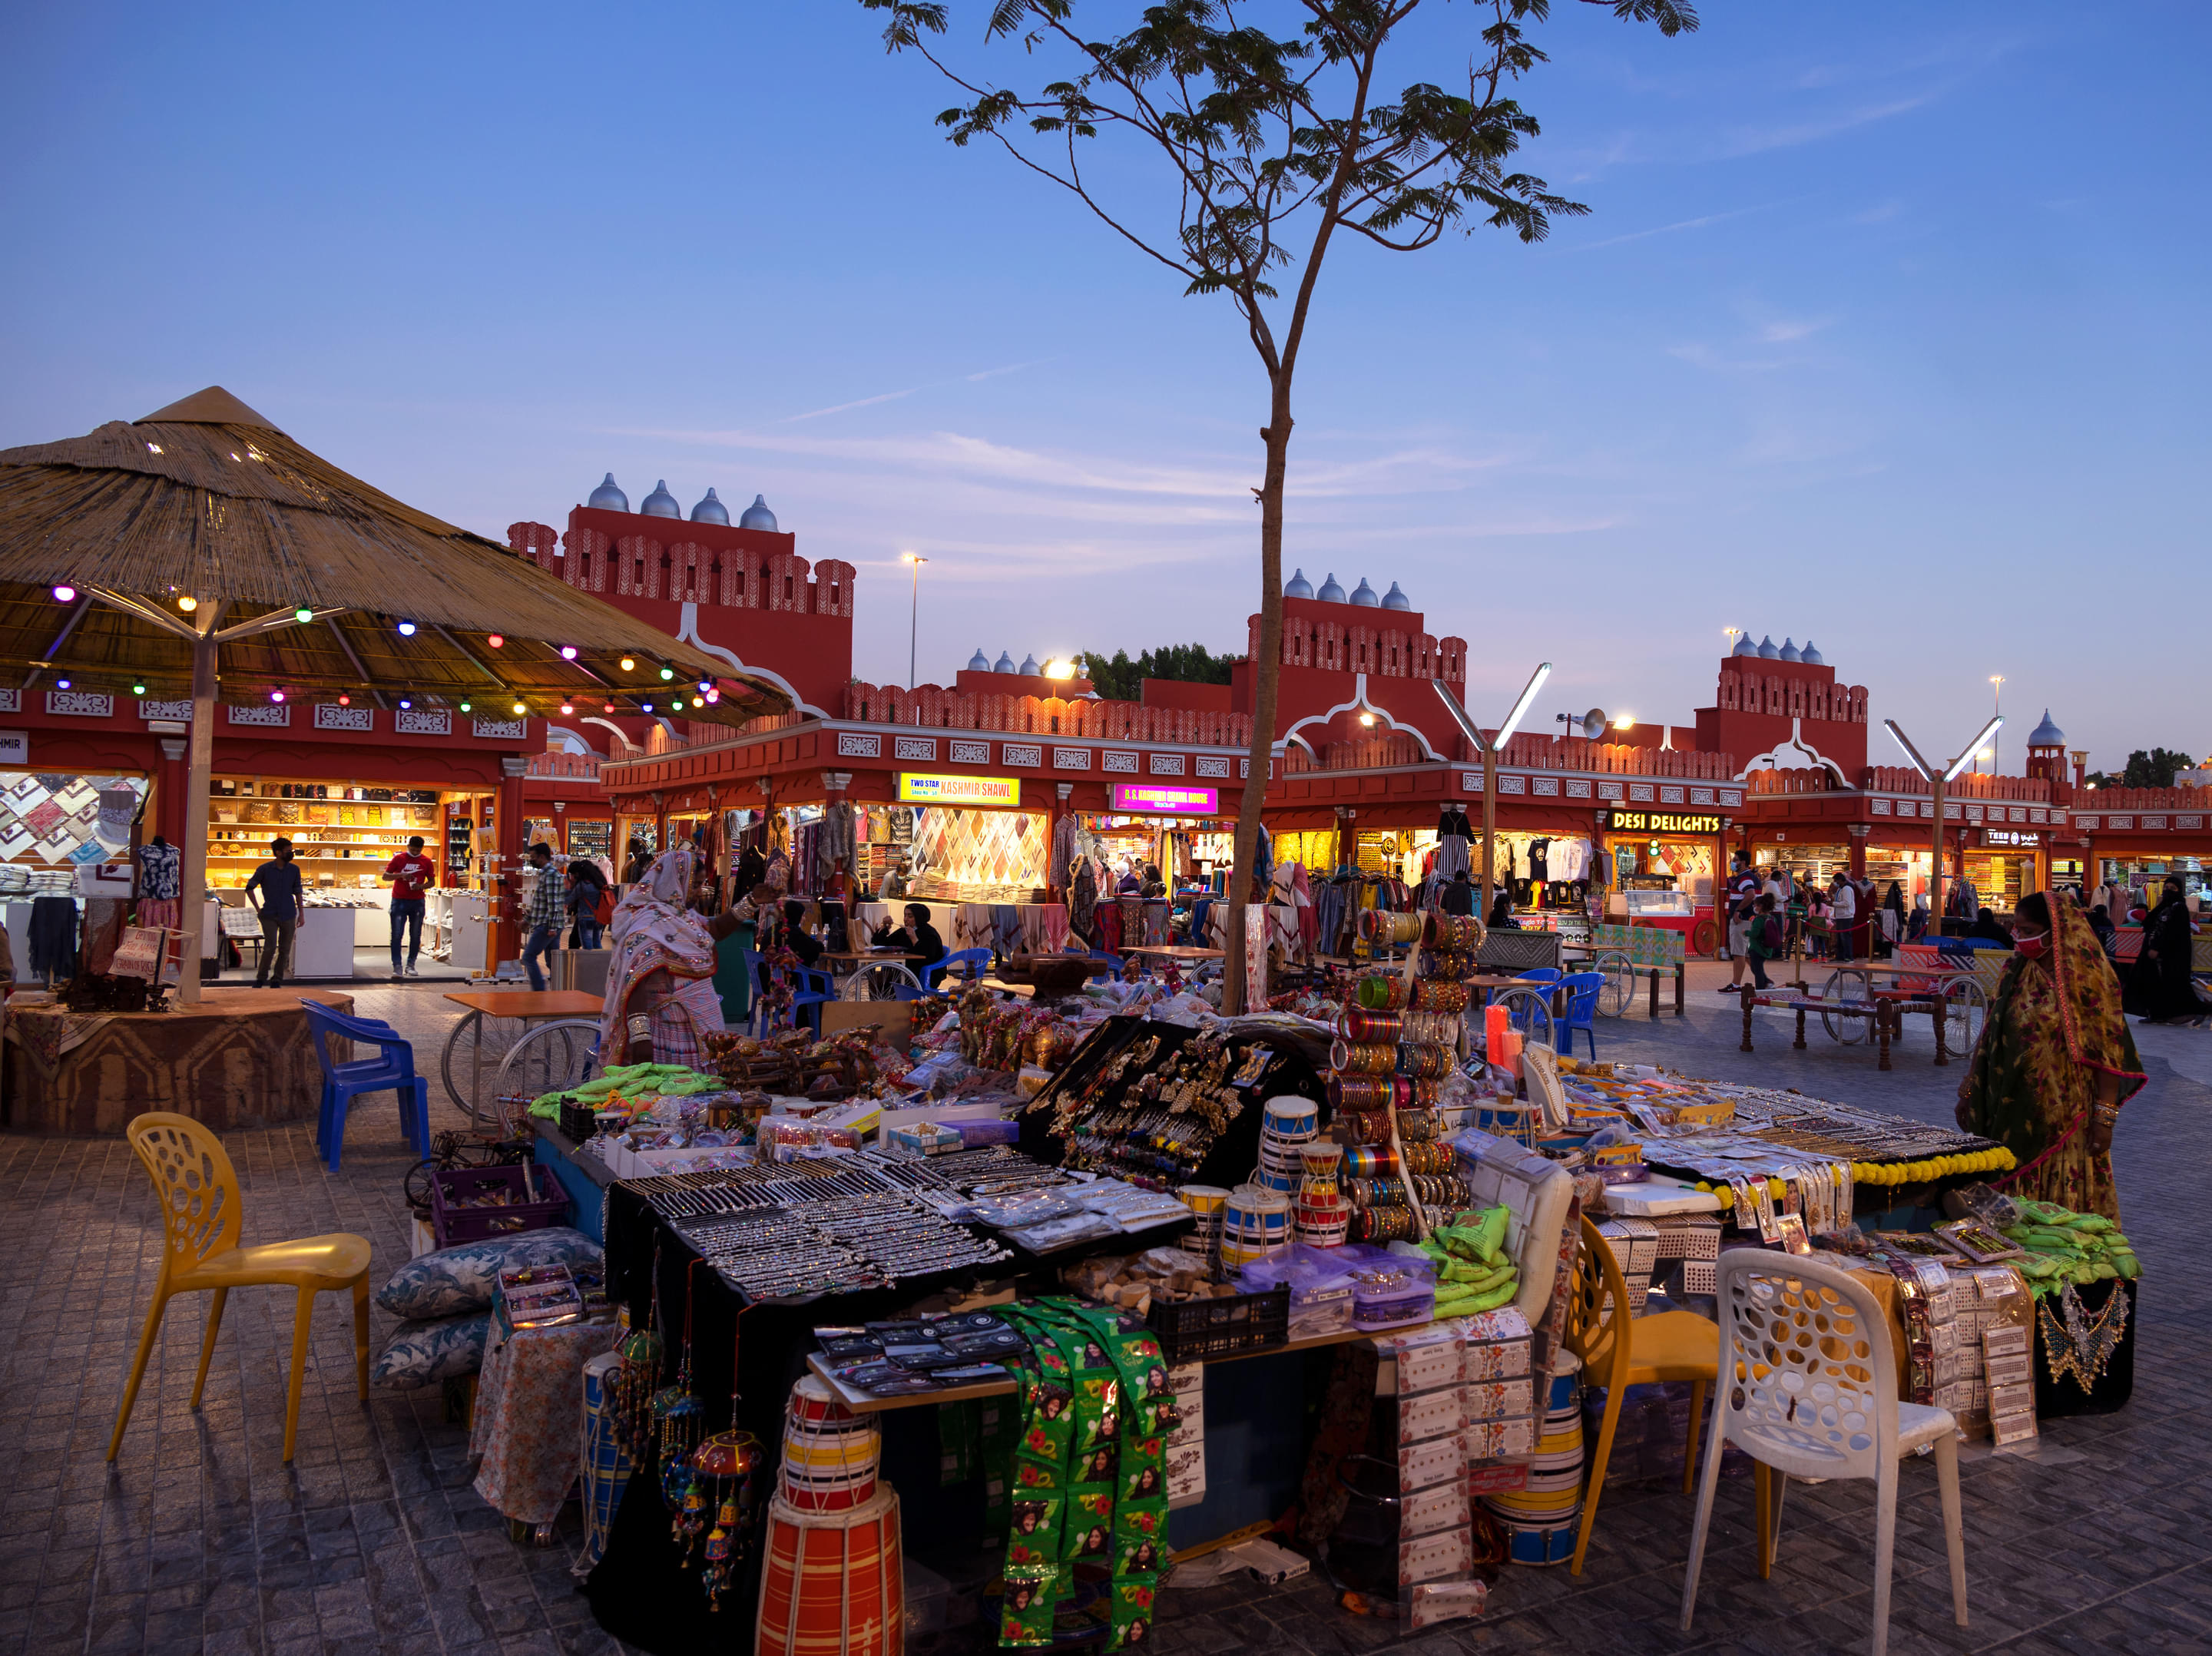 Dubai Flea Market Overview